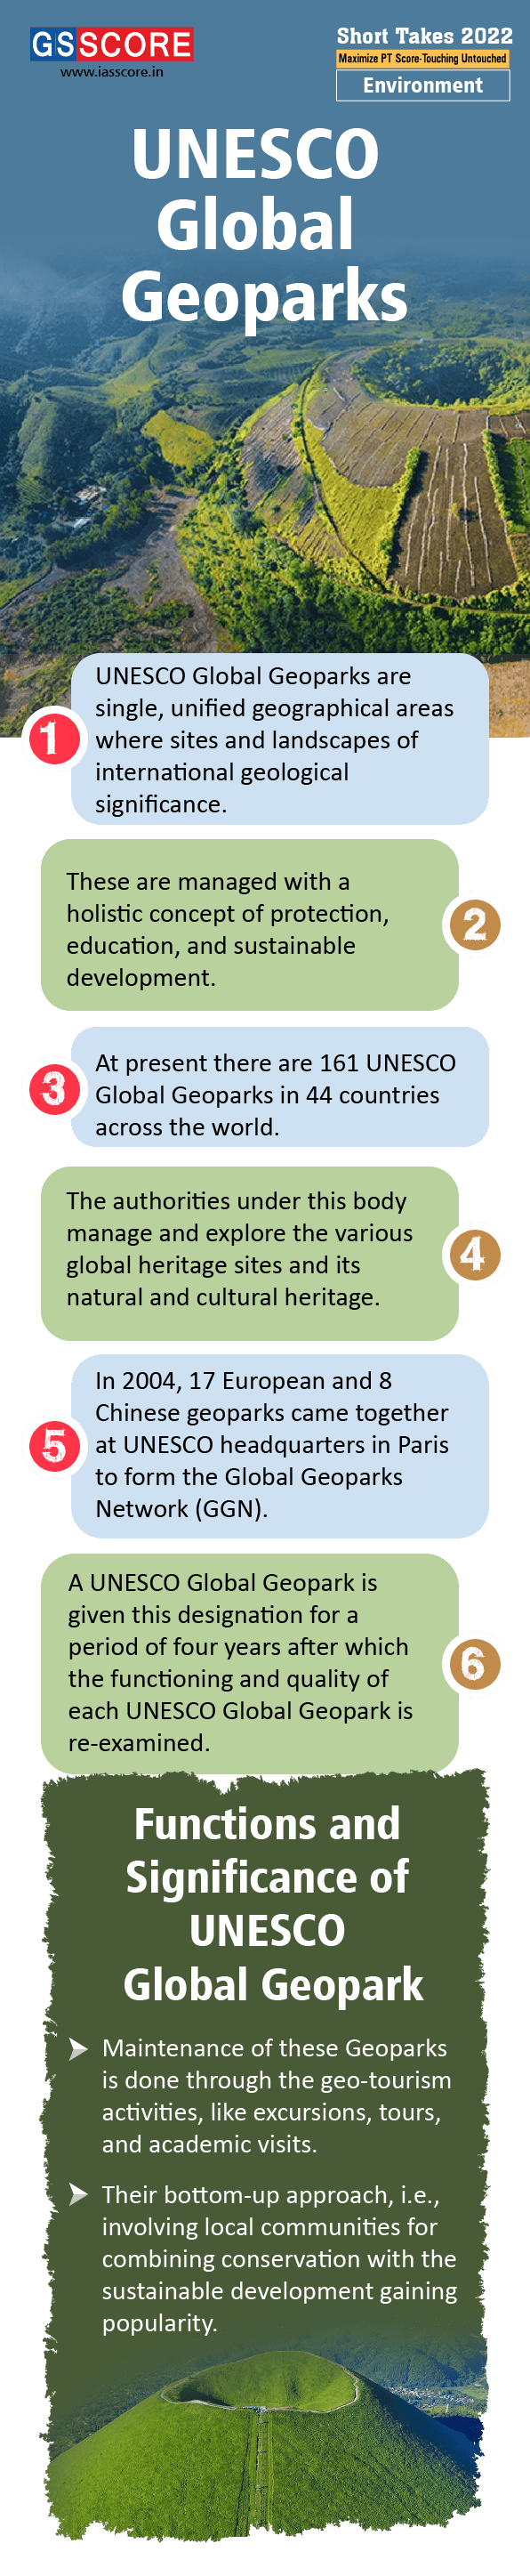 UNESCO Global Geoparks